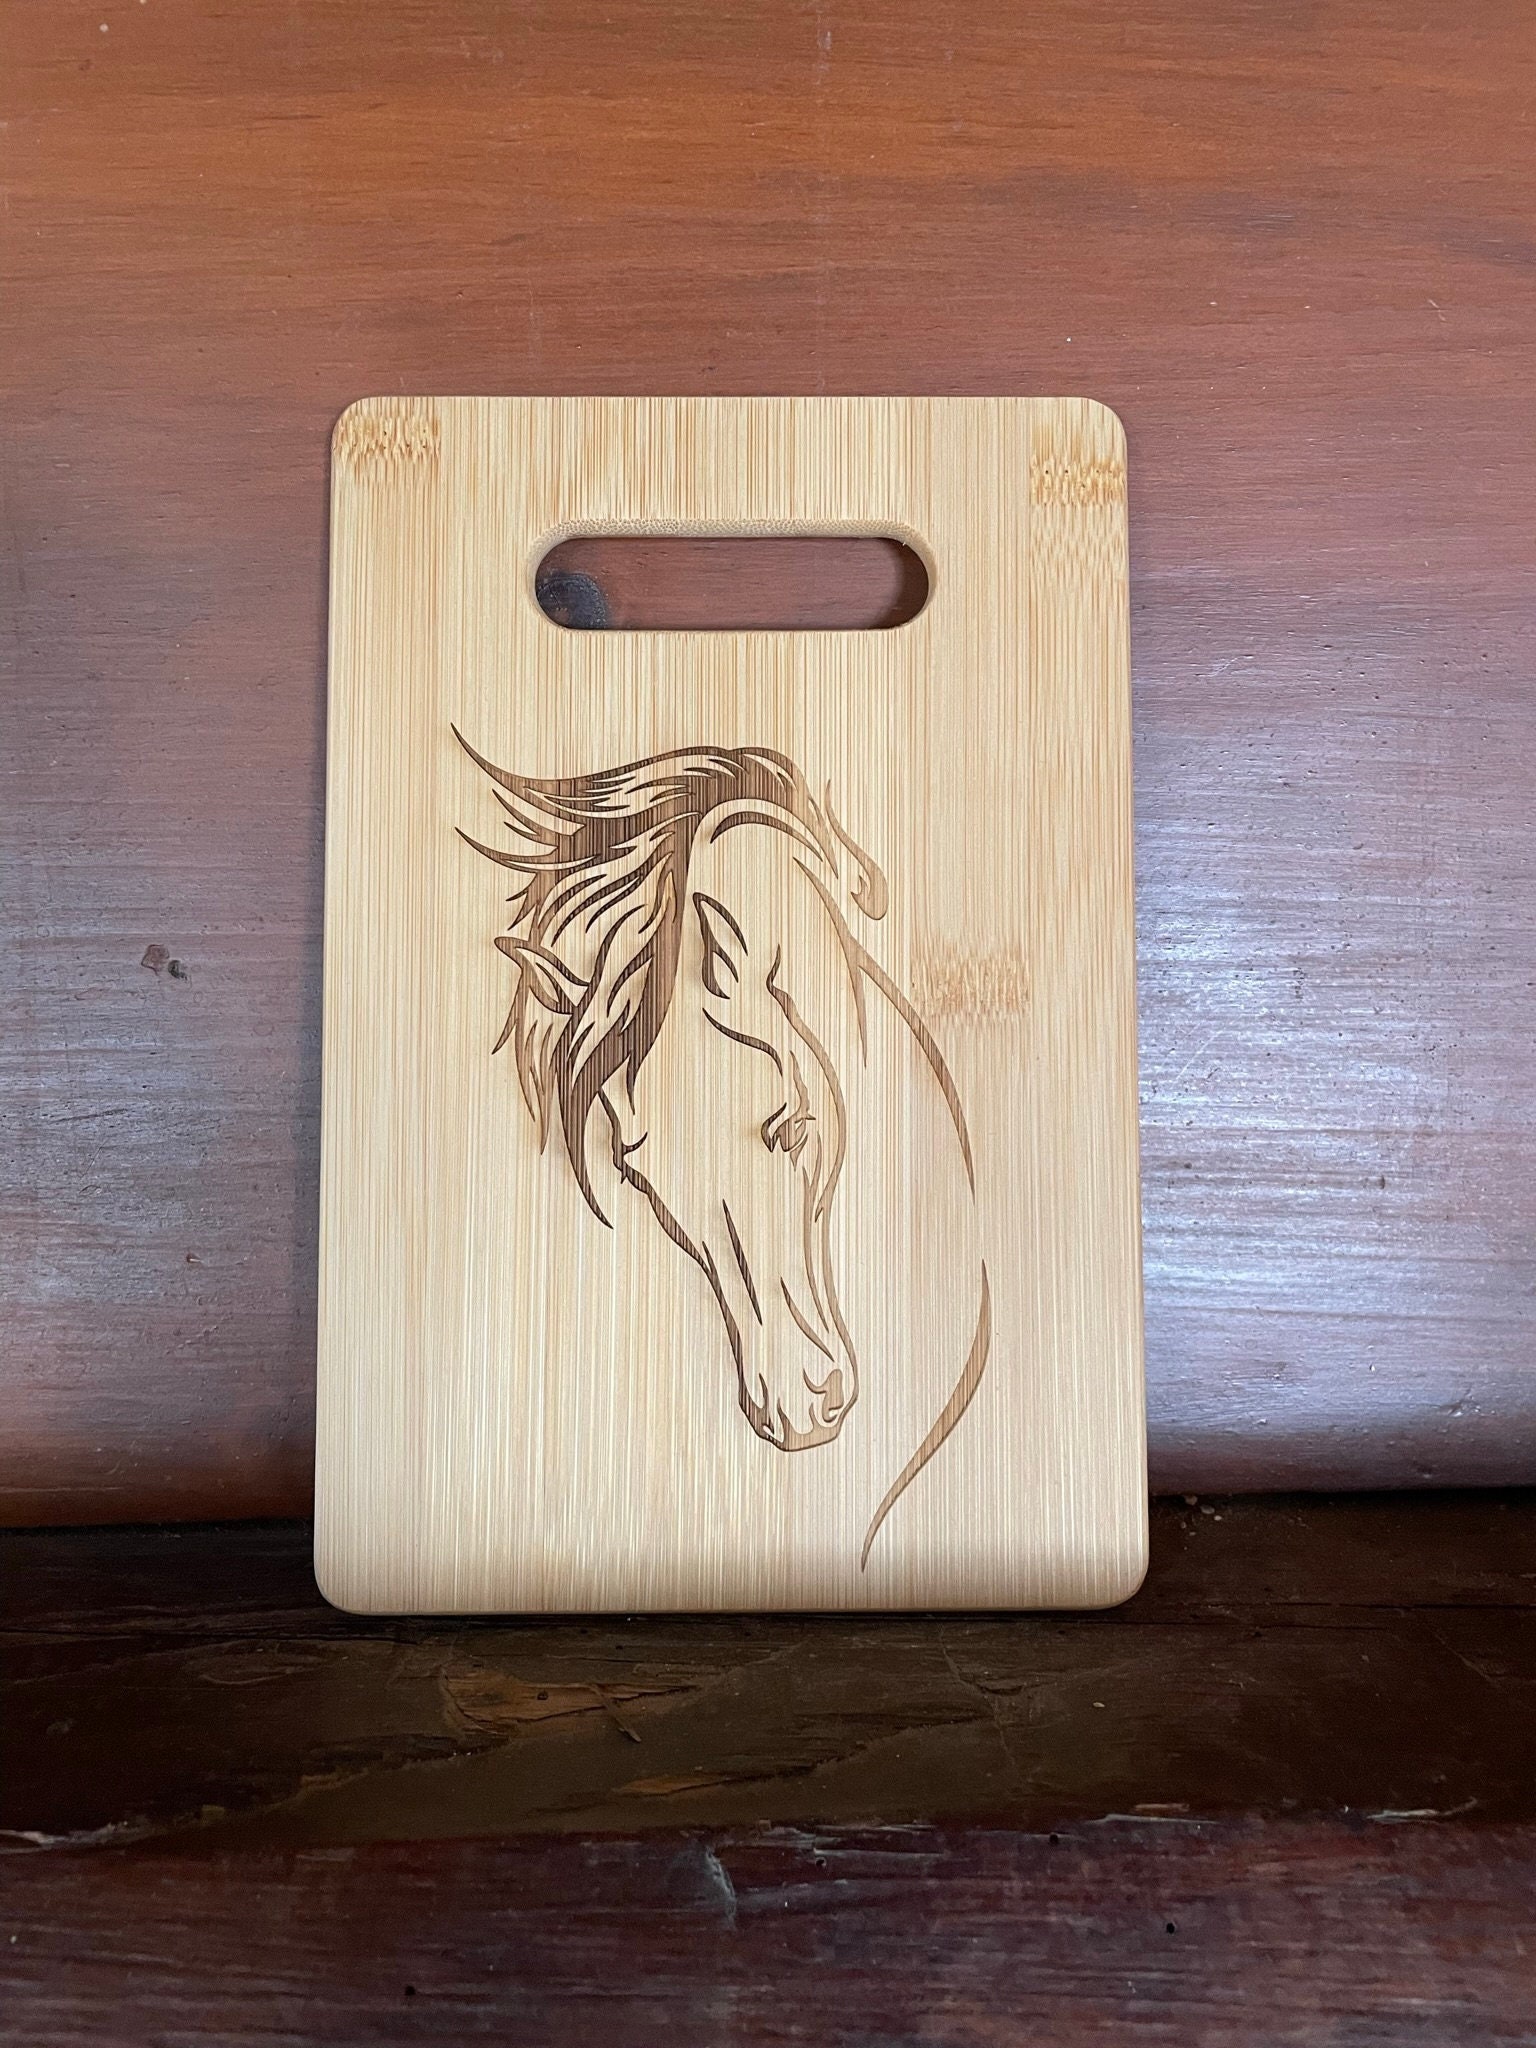 Horse Tree Design Bamboo Cutting Board